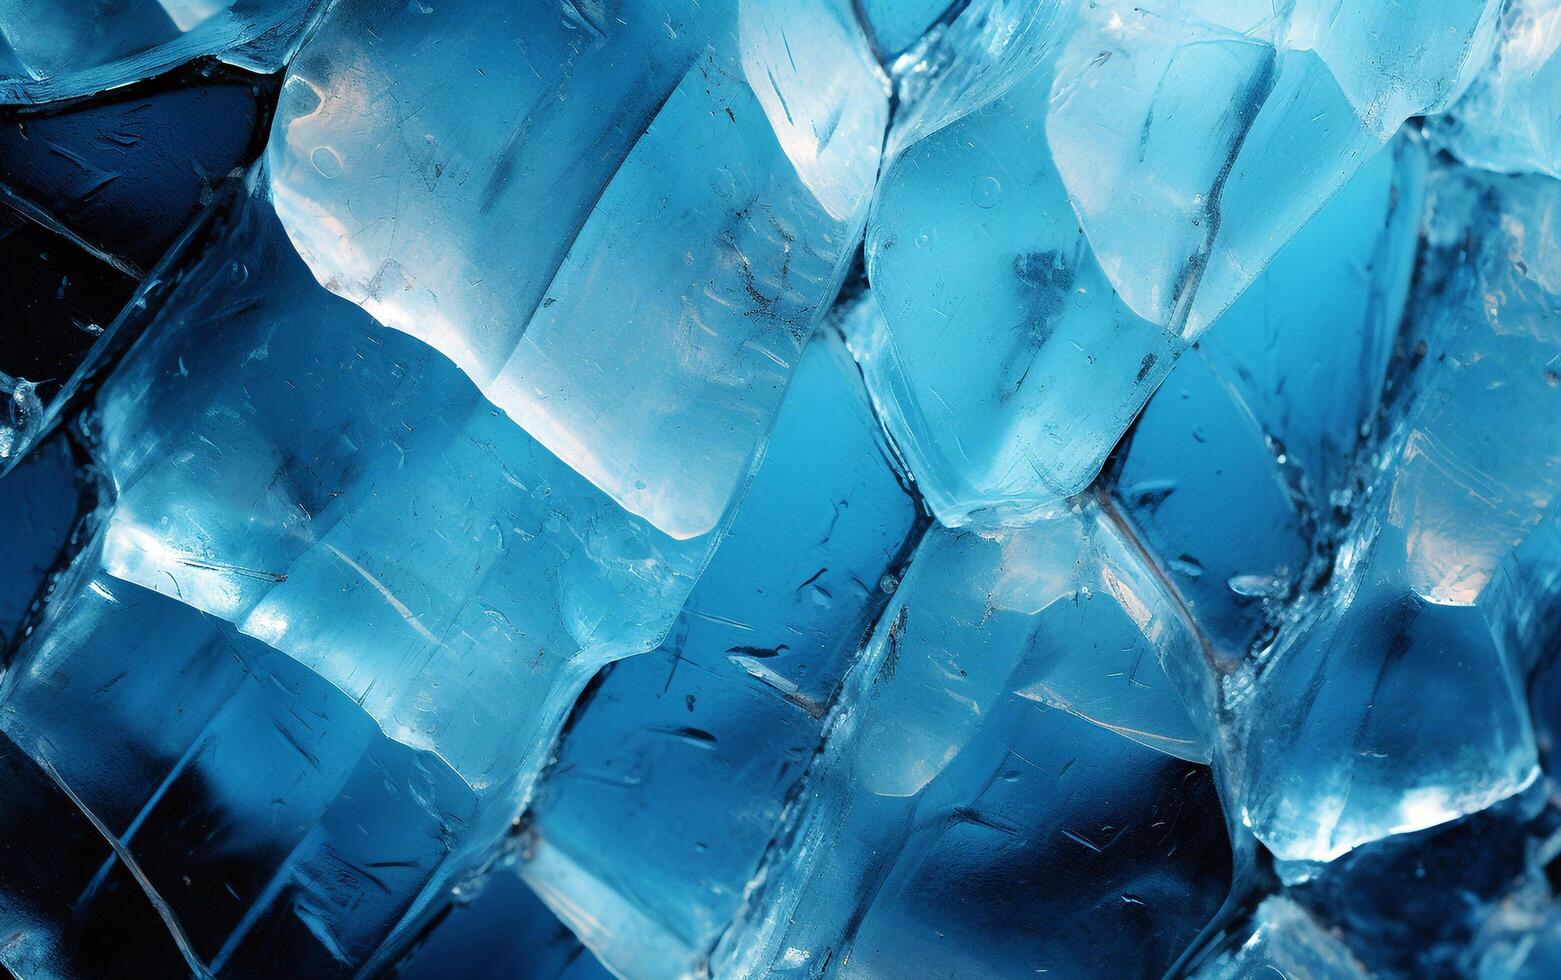 abstrato gelo fundo azul superfície com rachaduras foto